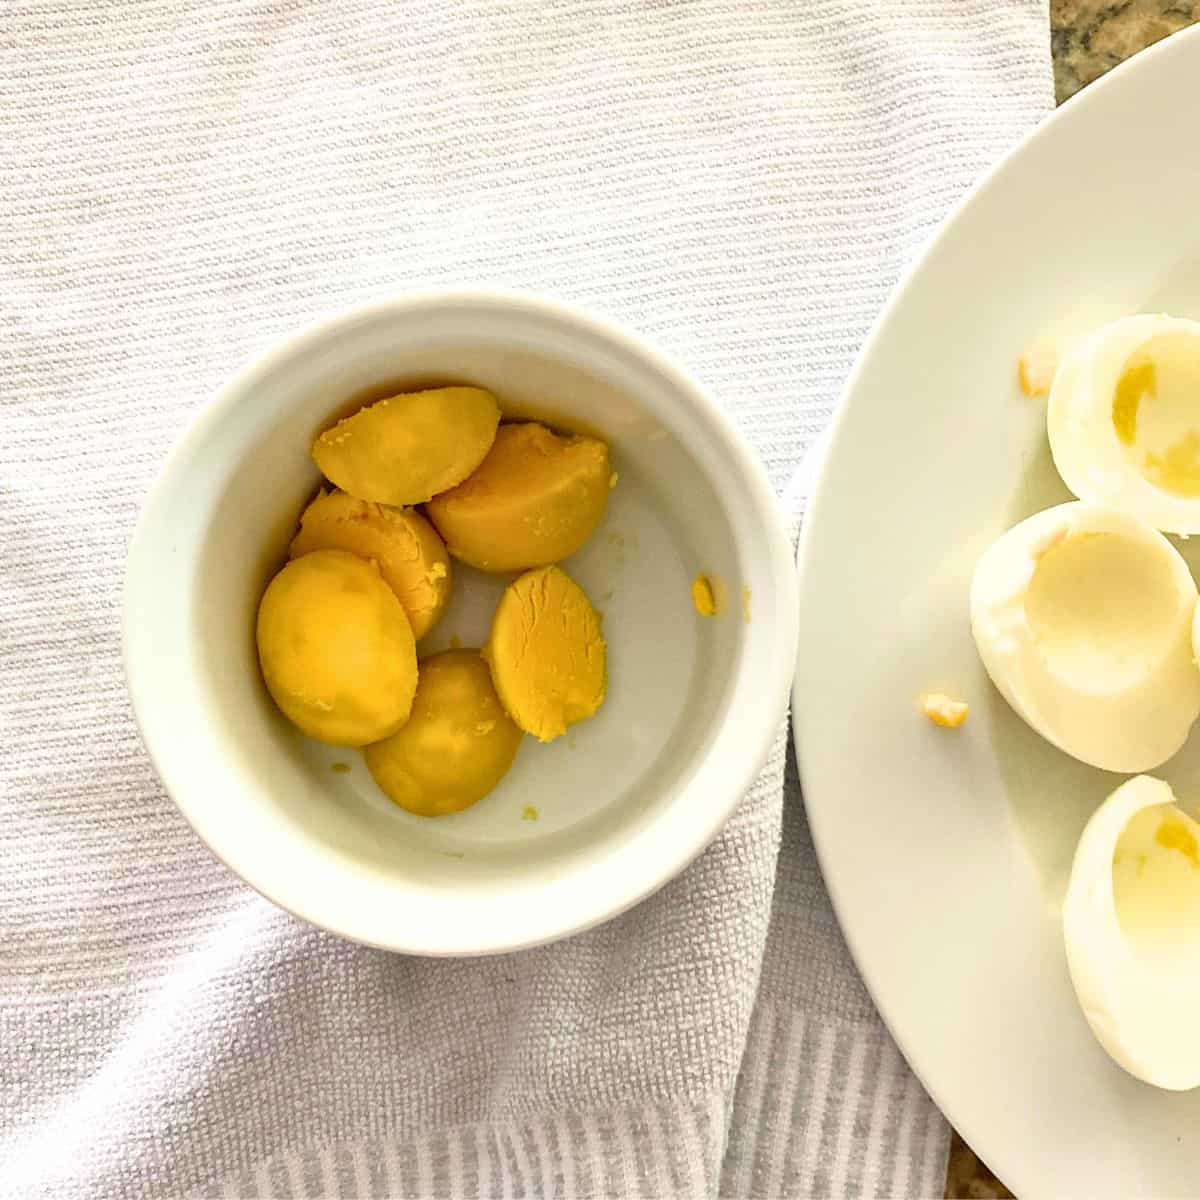 Hard boiled egg yolks in a white ramekin